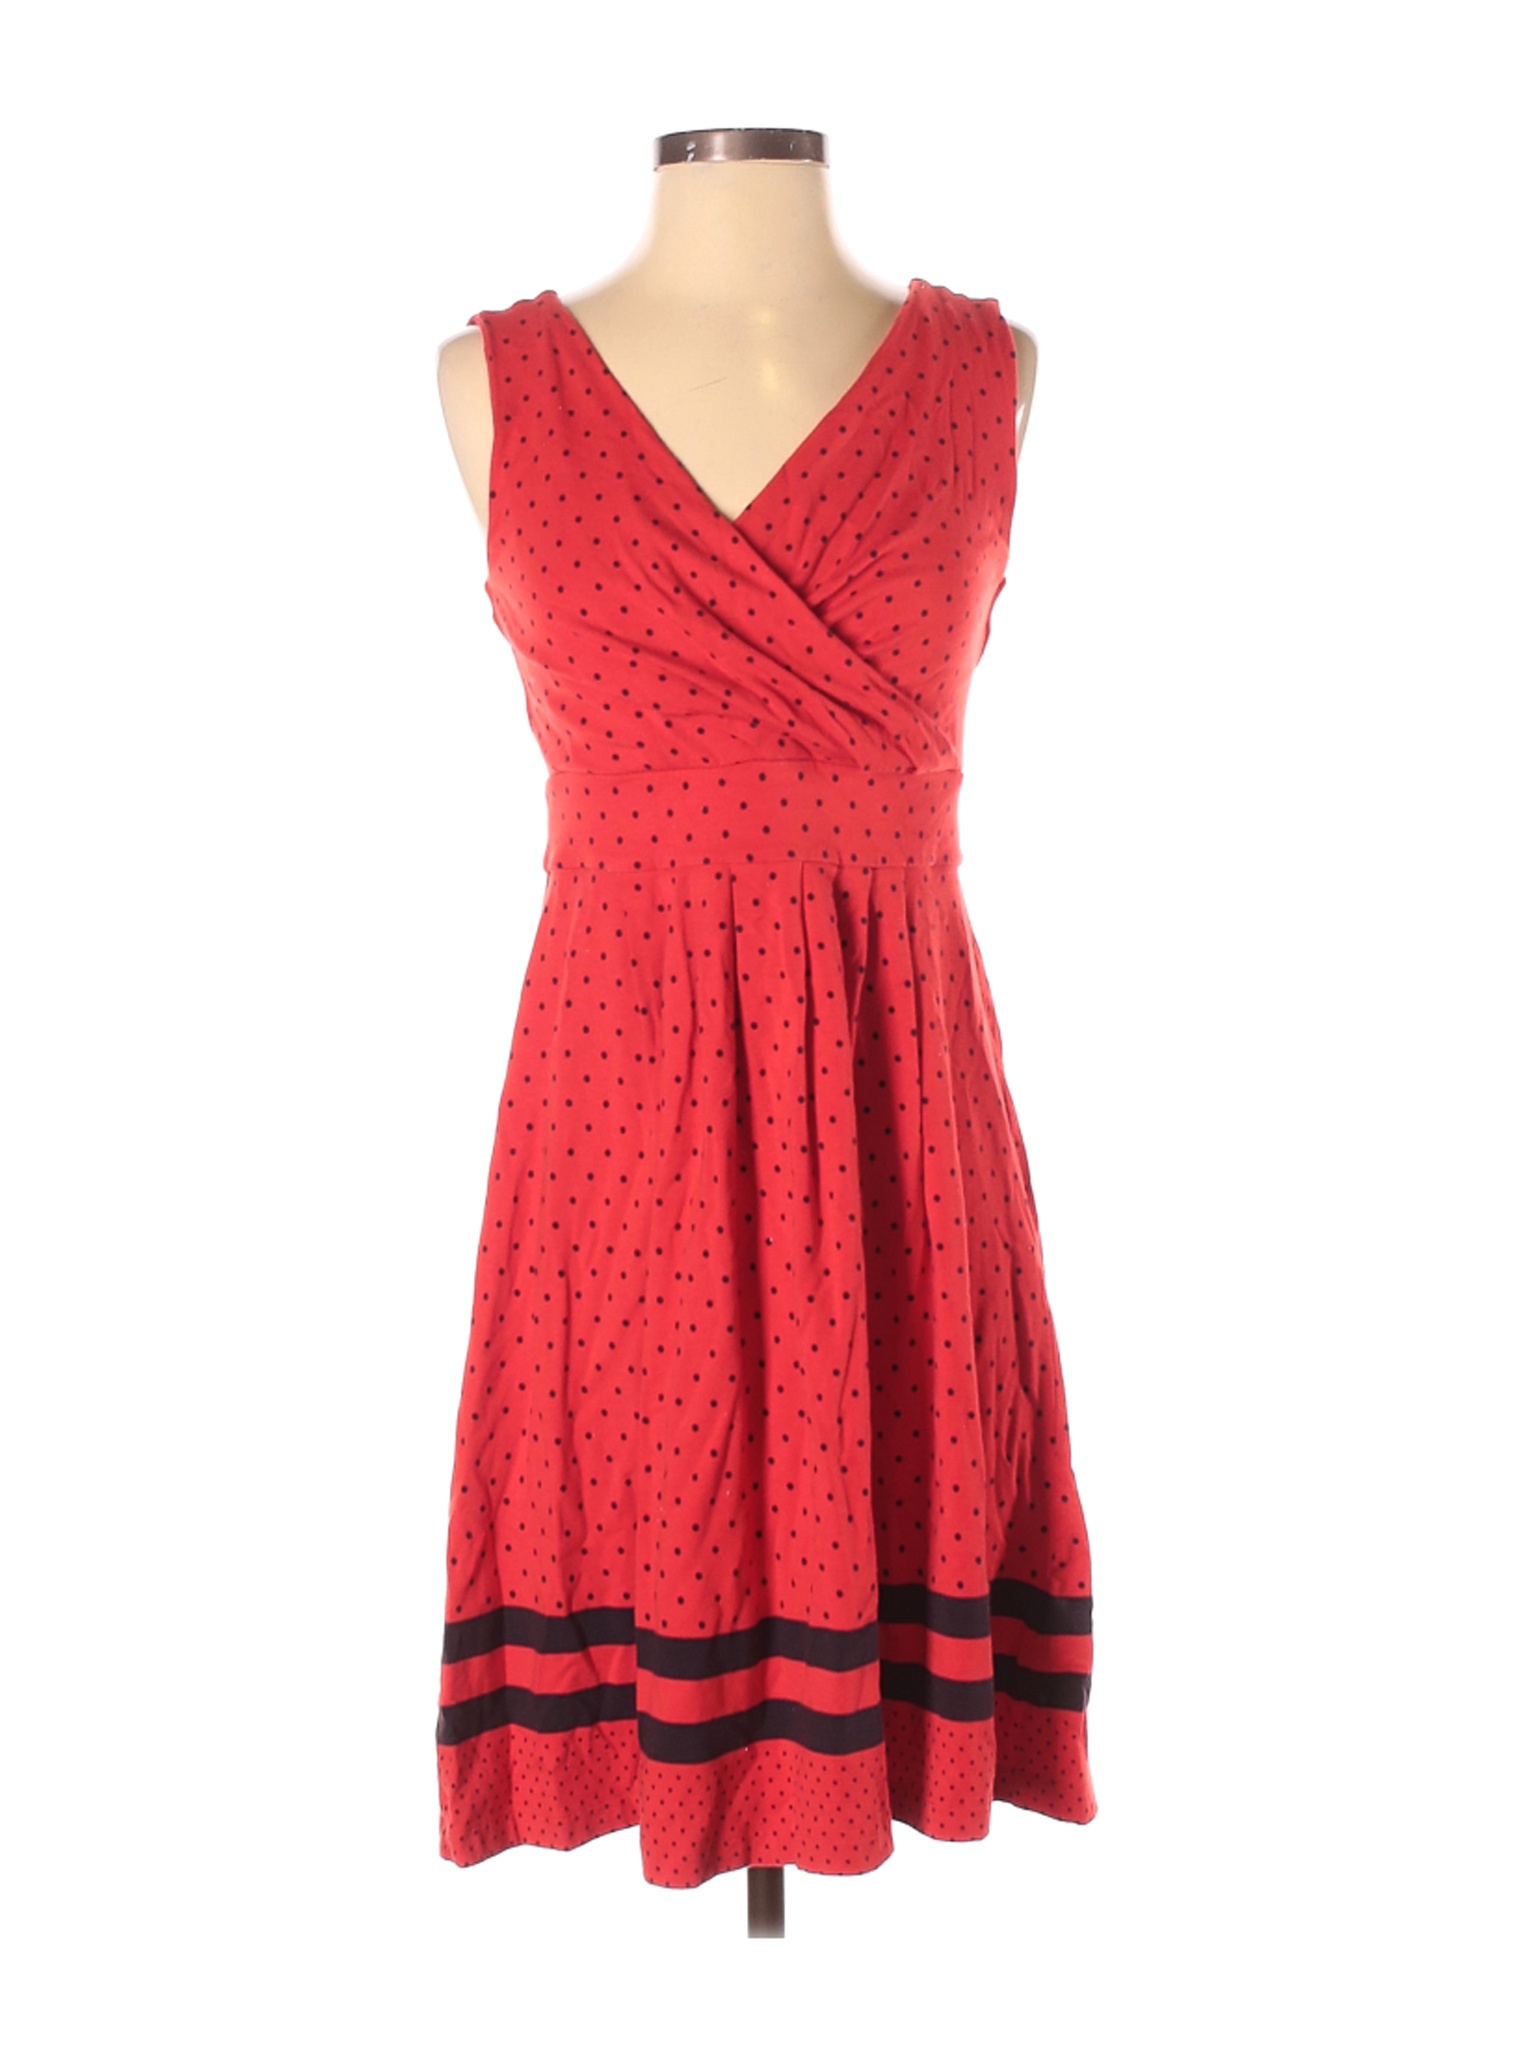 Lands' End Women Red Casual Dress S | eBay